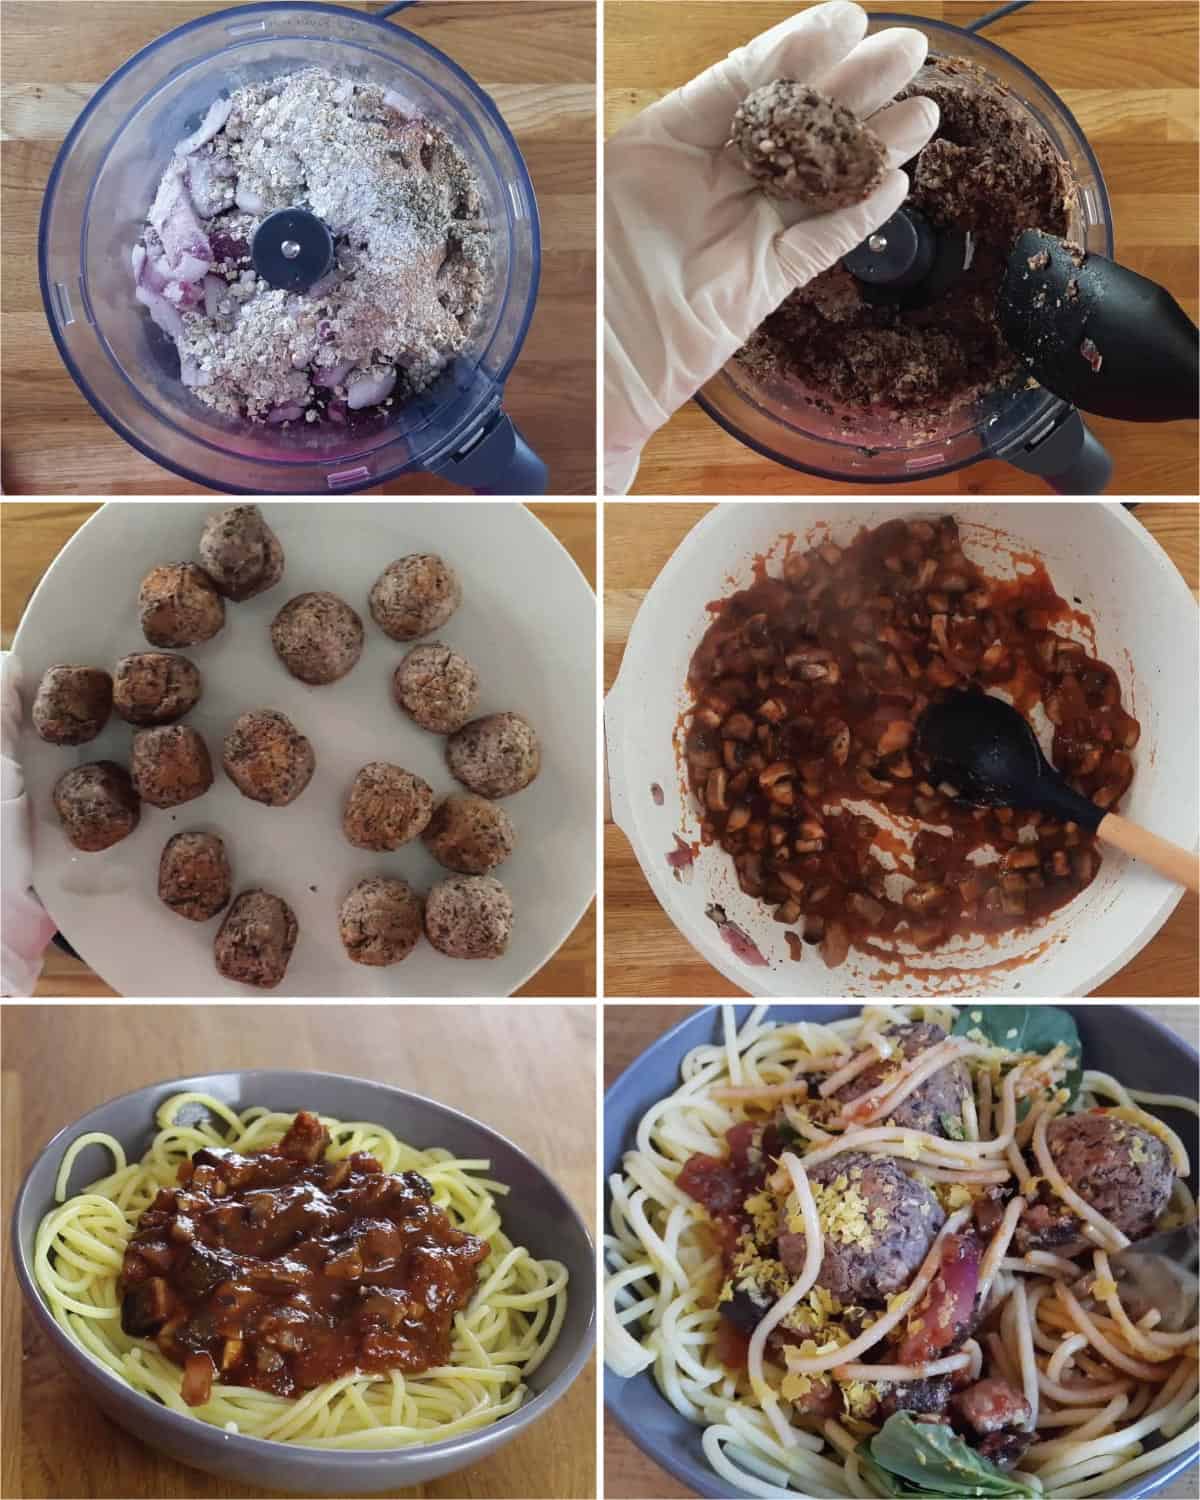 The process of making vegan meatballs and spaghetti.